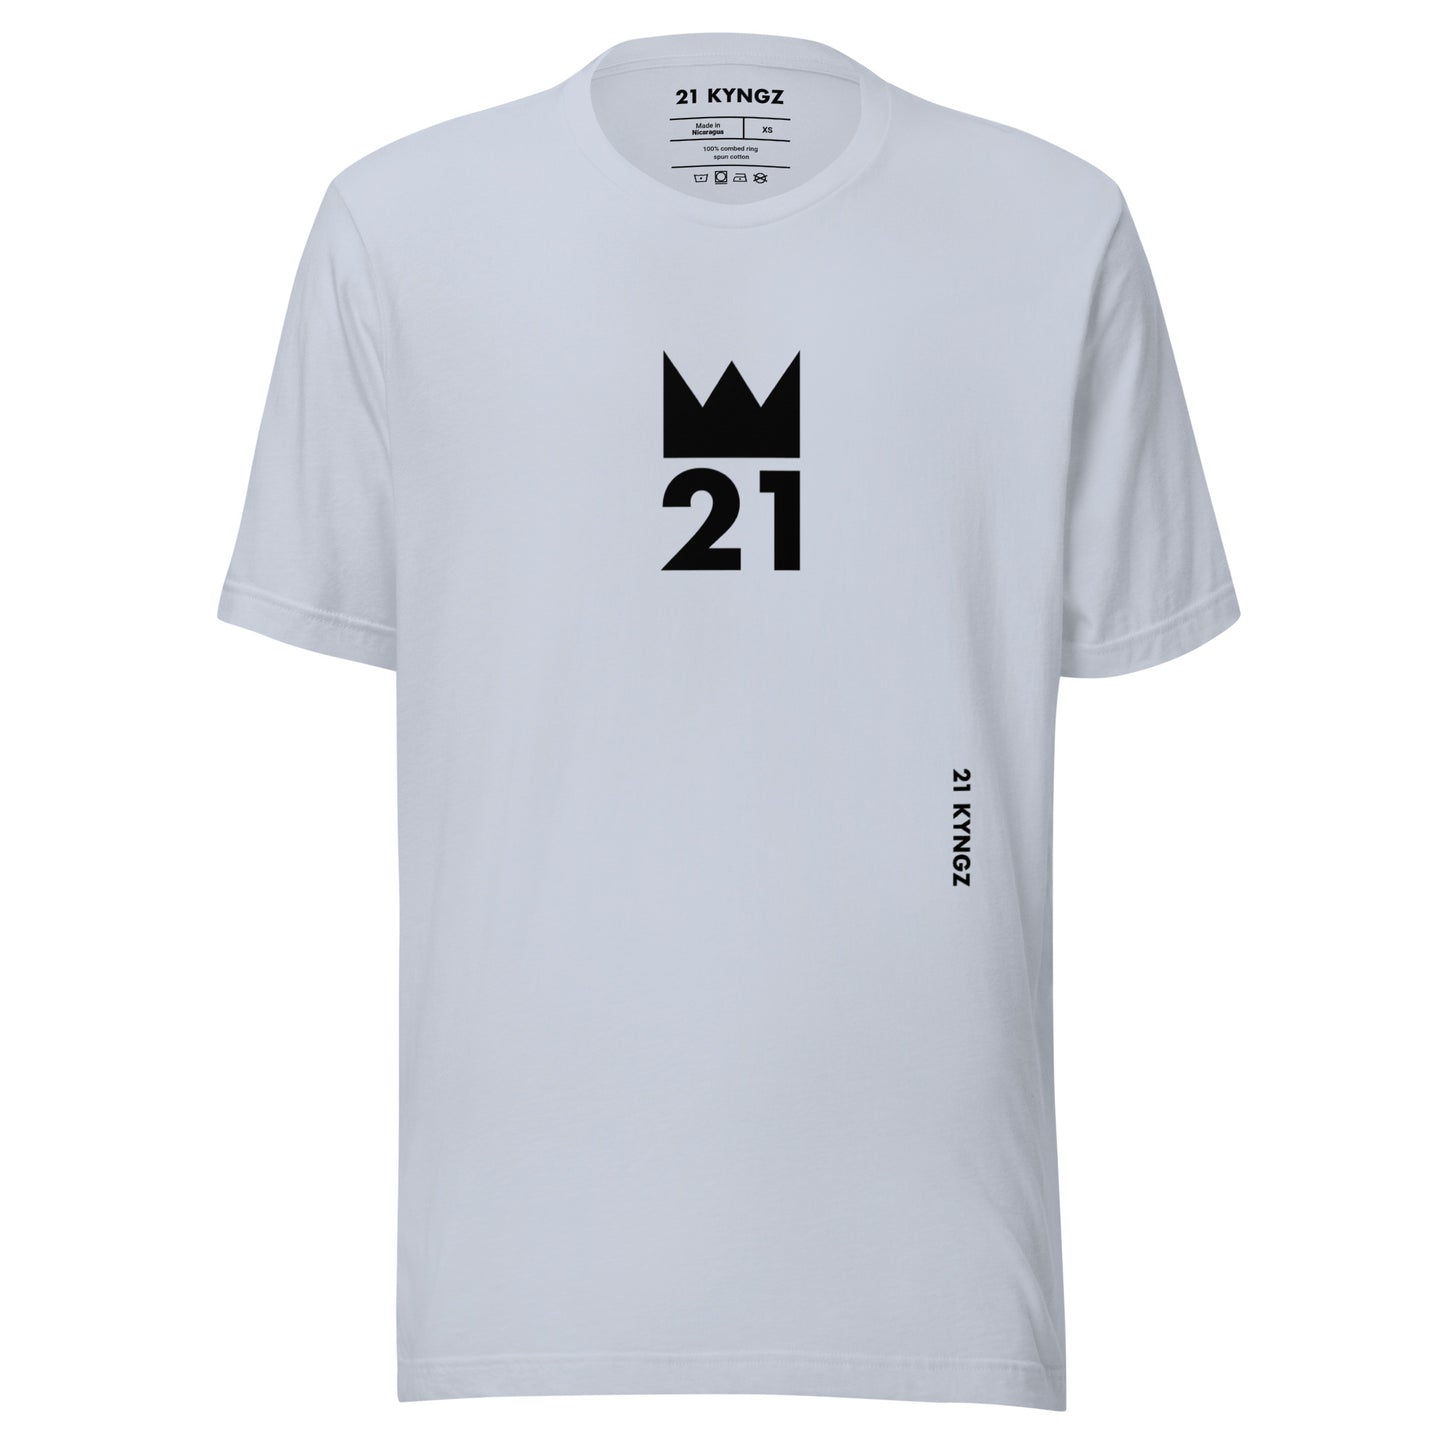 21 KYNGZ (Blk)2 t-shirt